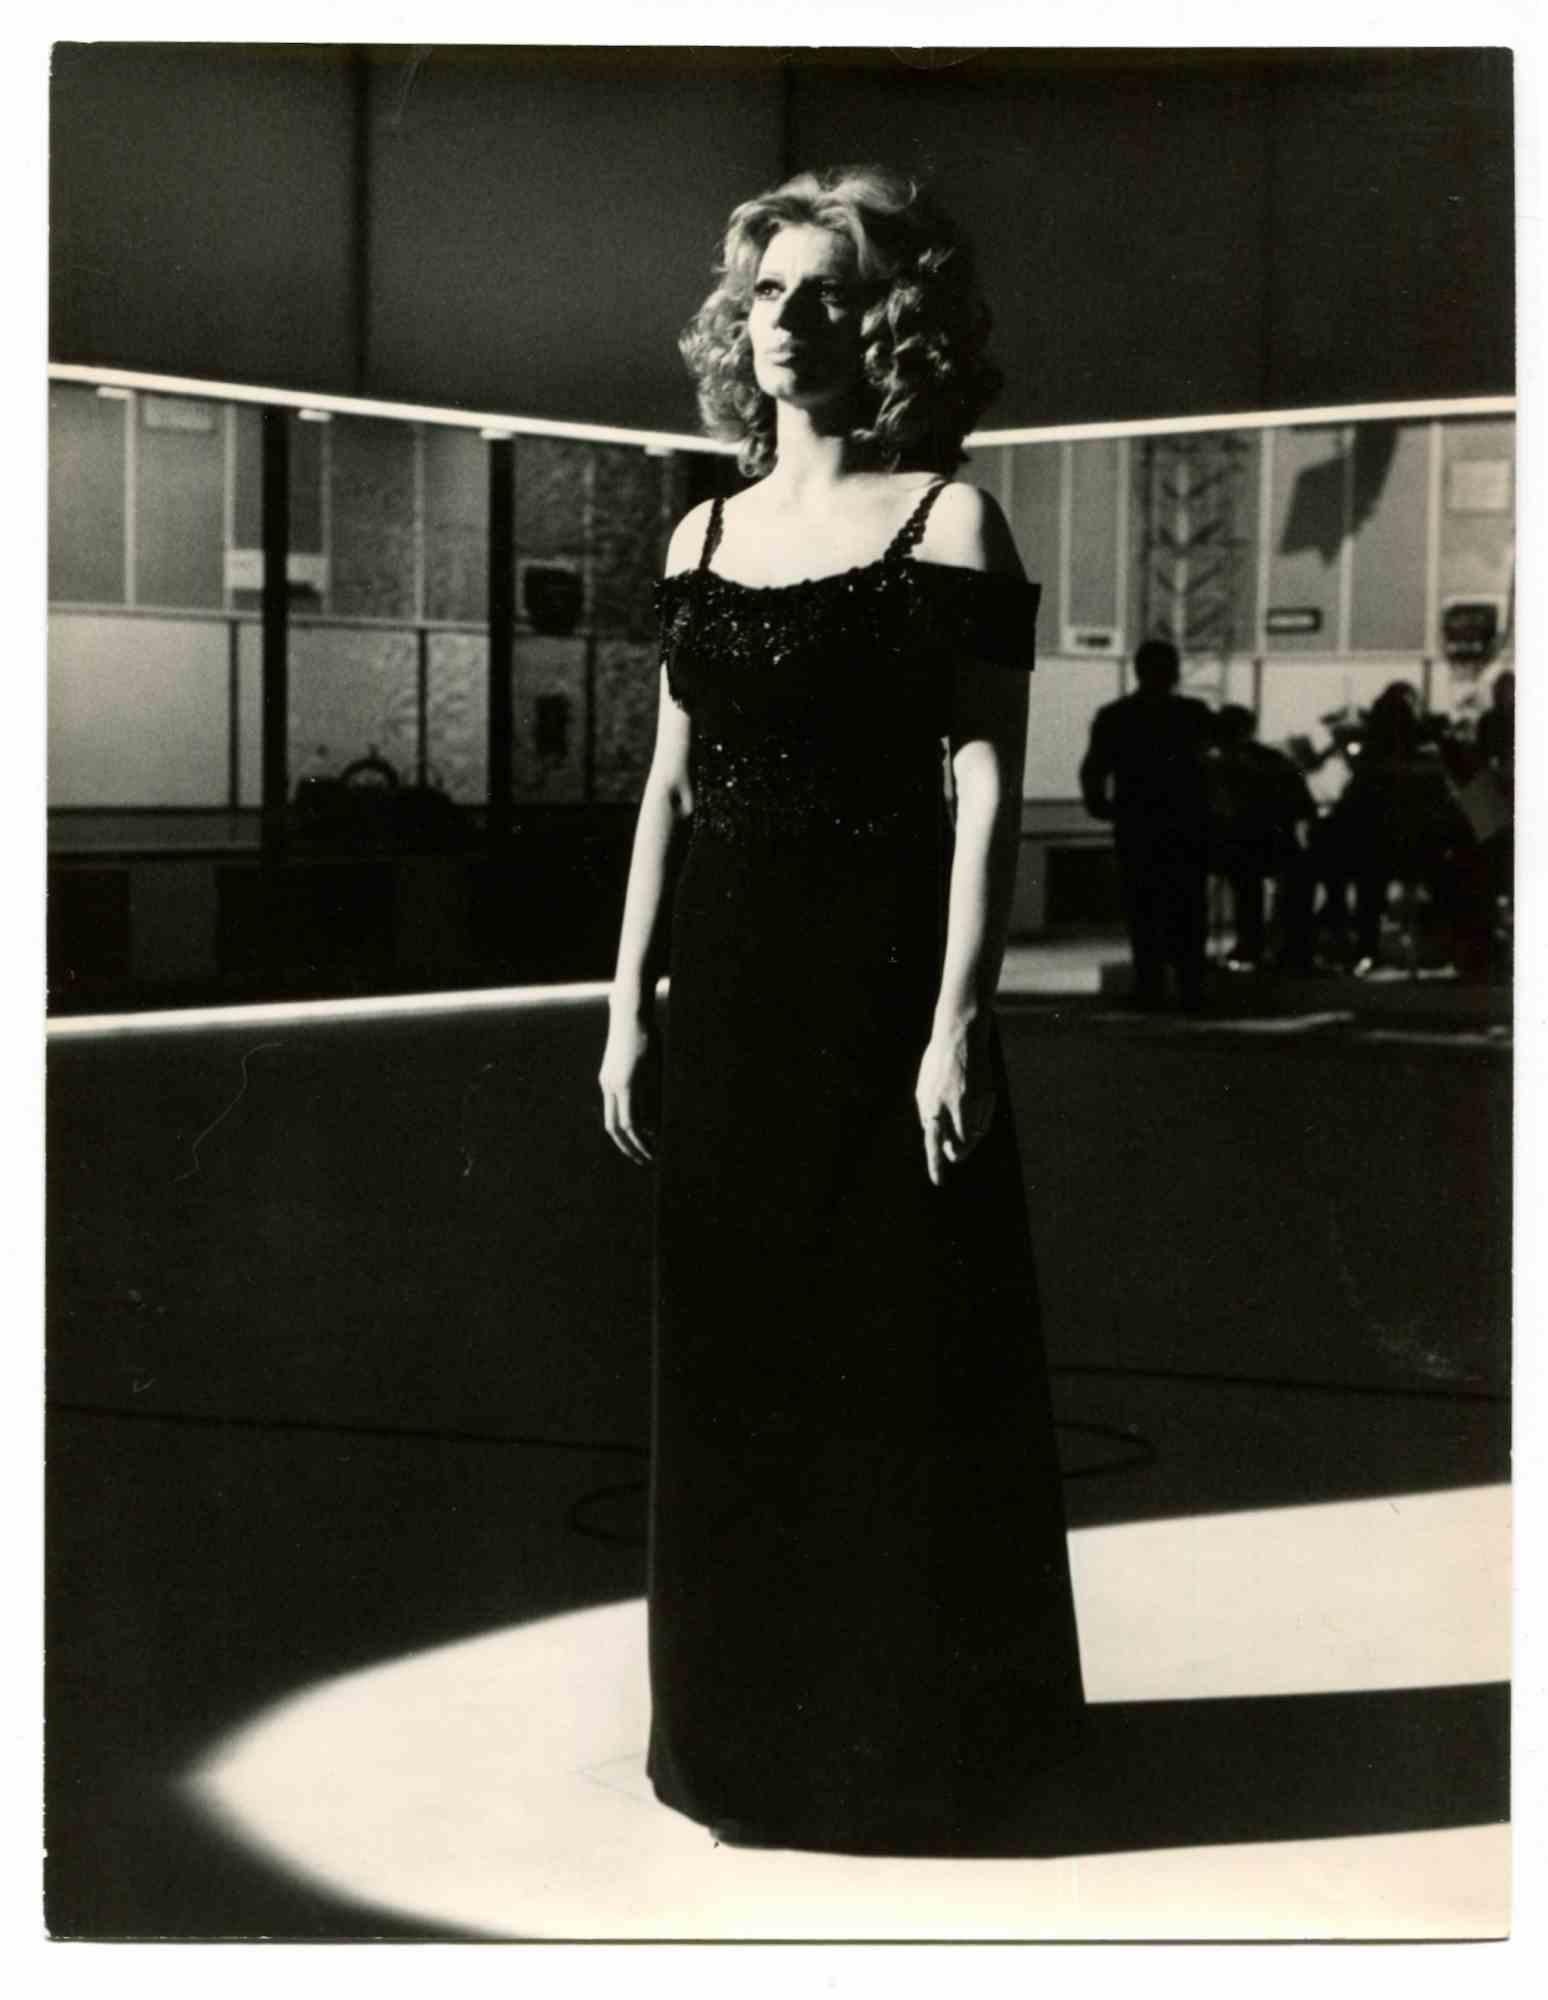 Unknown Portrait Photograph - Photo of Iva Zanicchi - Vintage Photo - 1970s